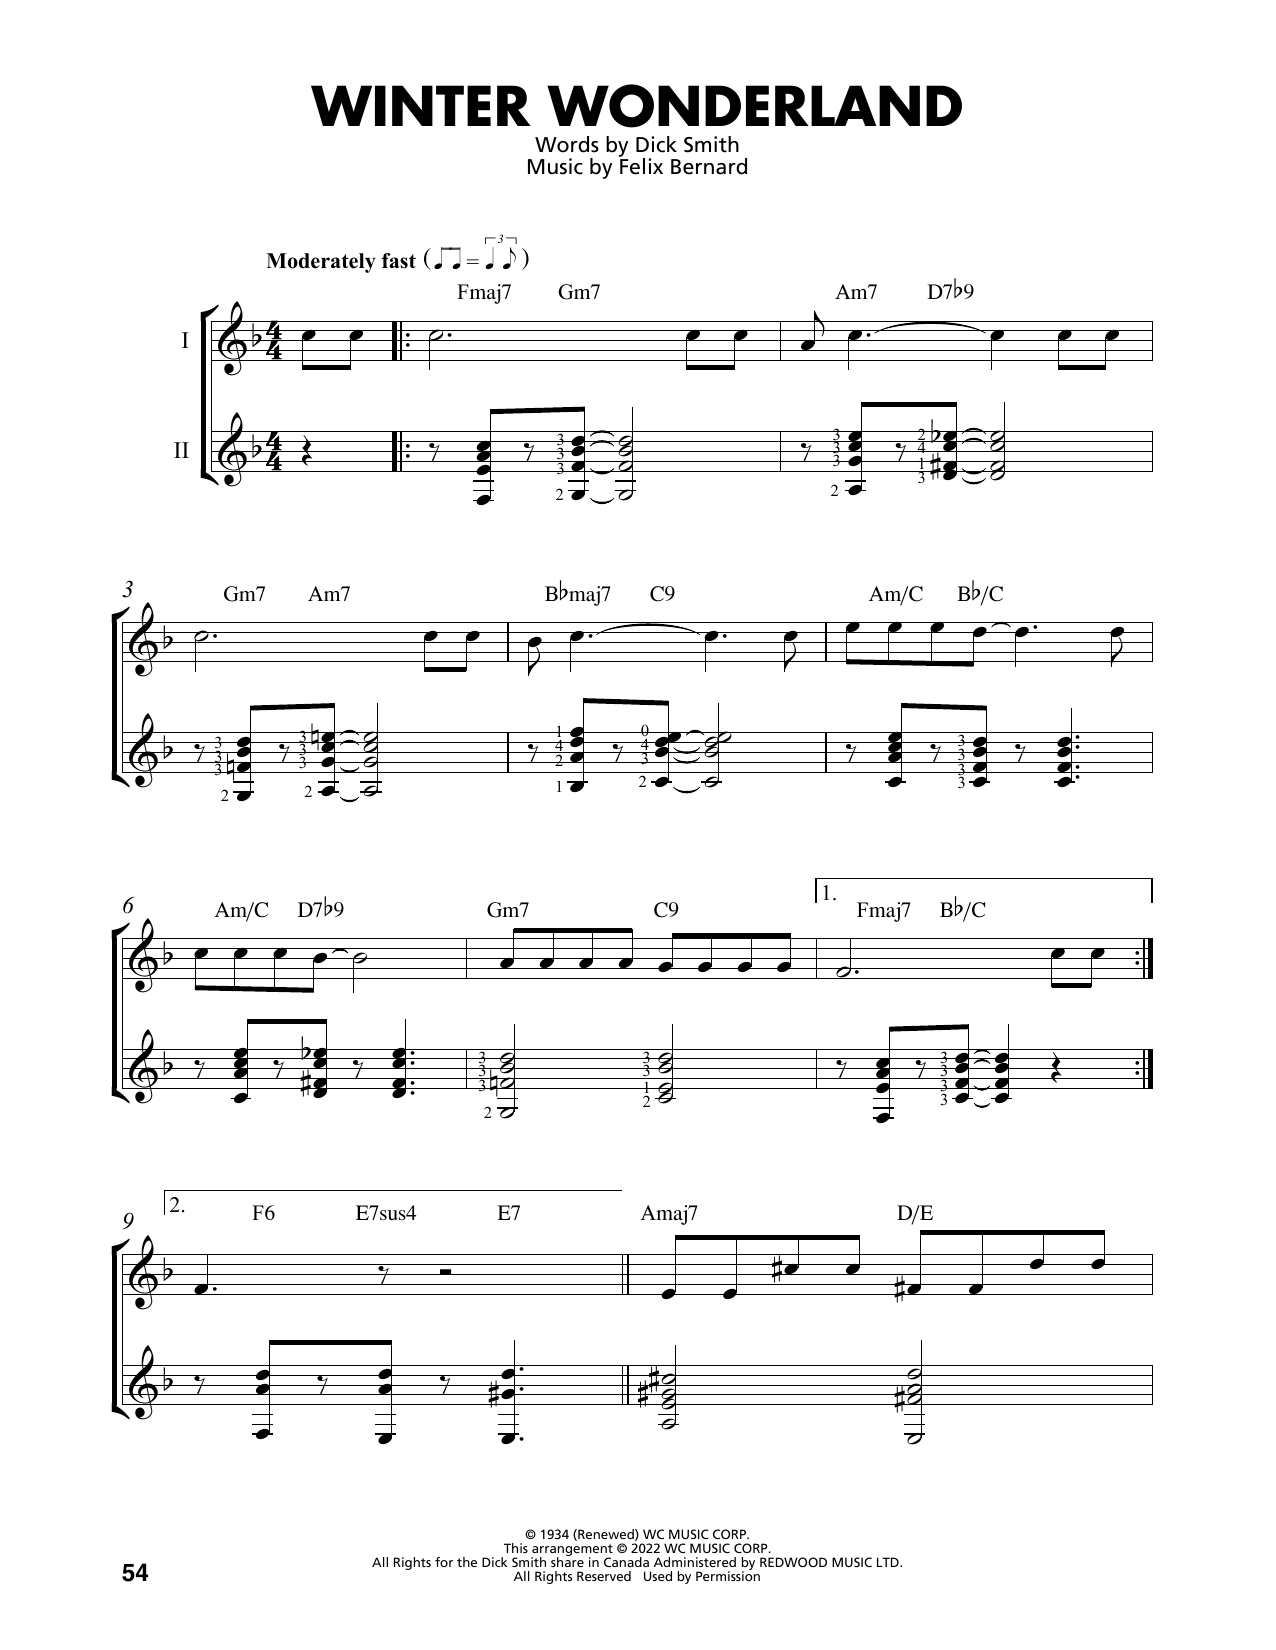 Felix Bernard Winter Wonderland (arr. Mark Phillips) Sheet Music Notes & Chords for Easy Guitar Tab - Download or Print PDF